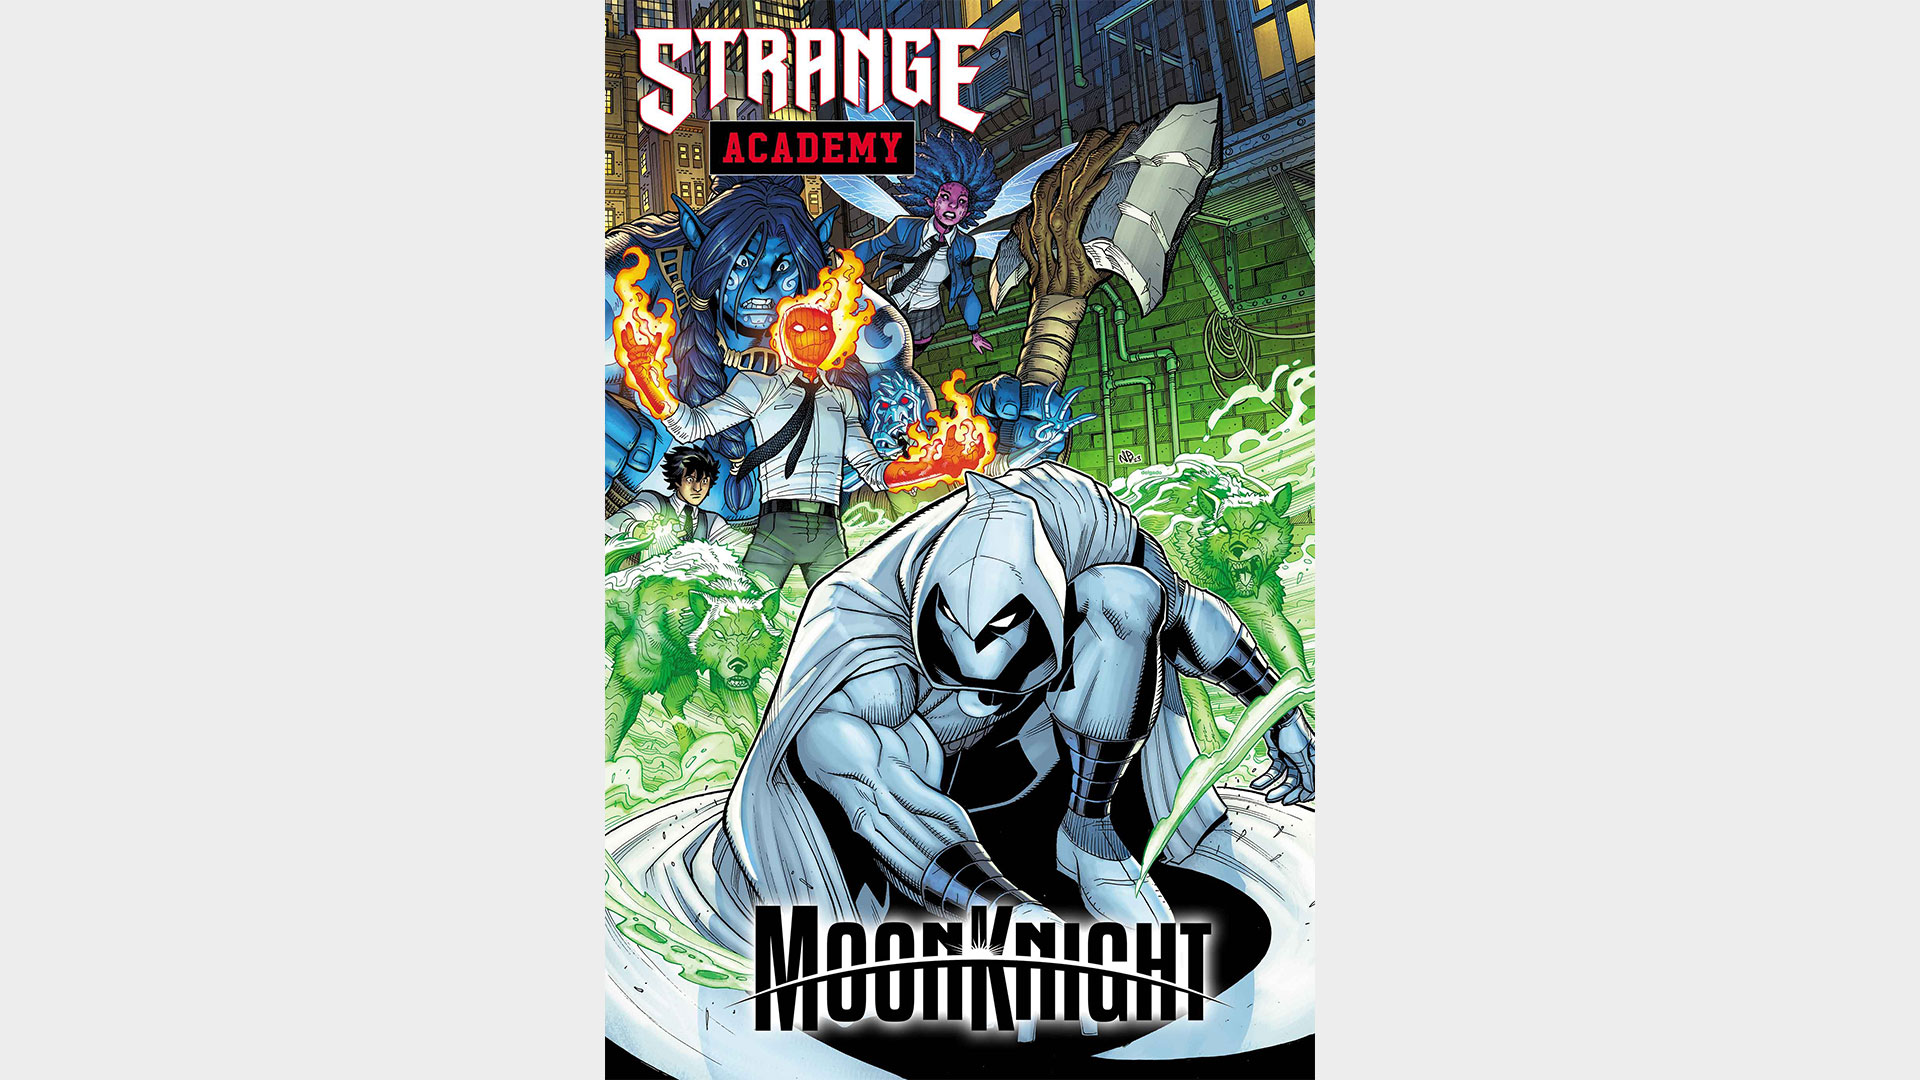 Couverture de Strange Academy Moon Knight #1